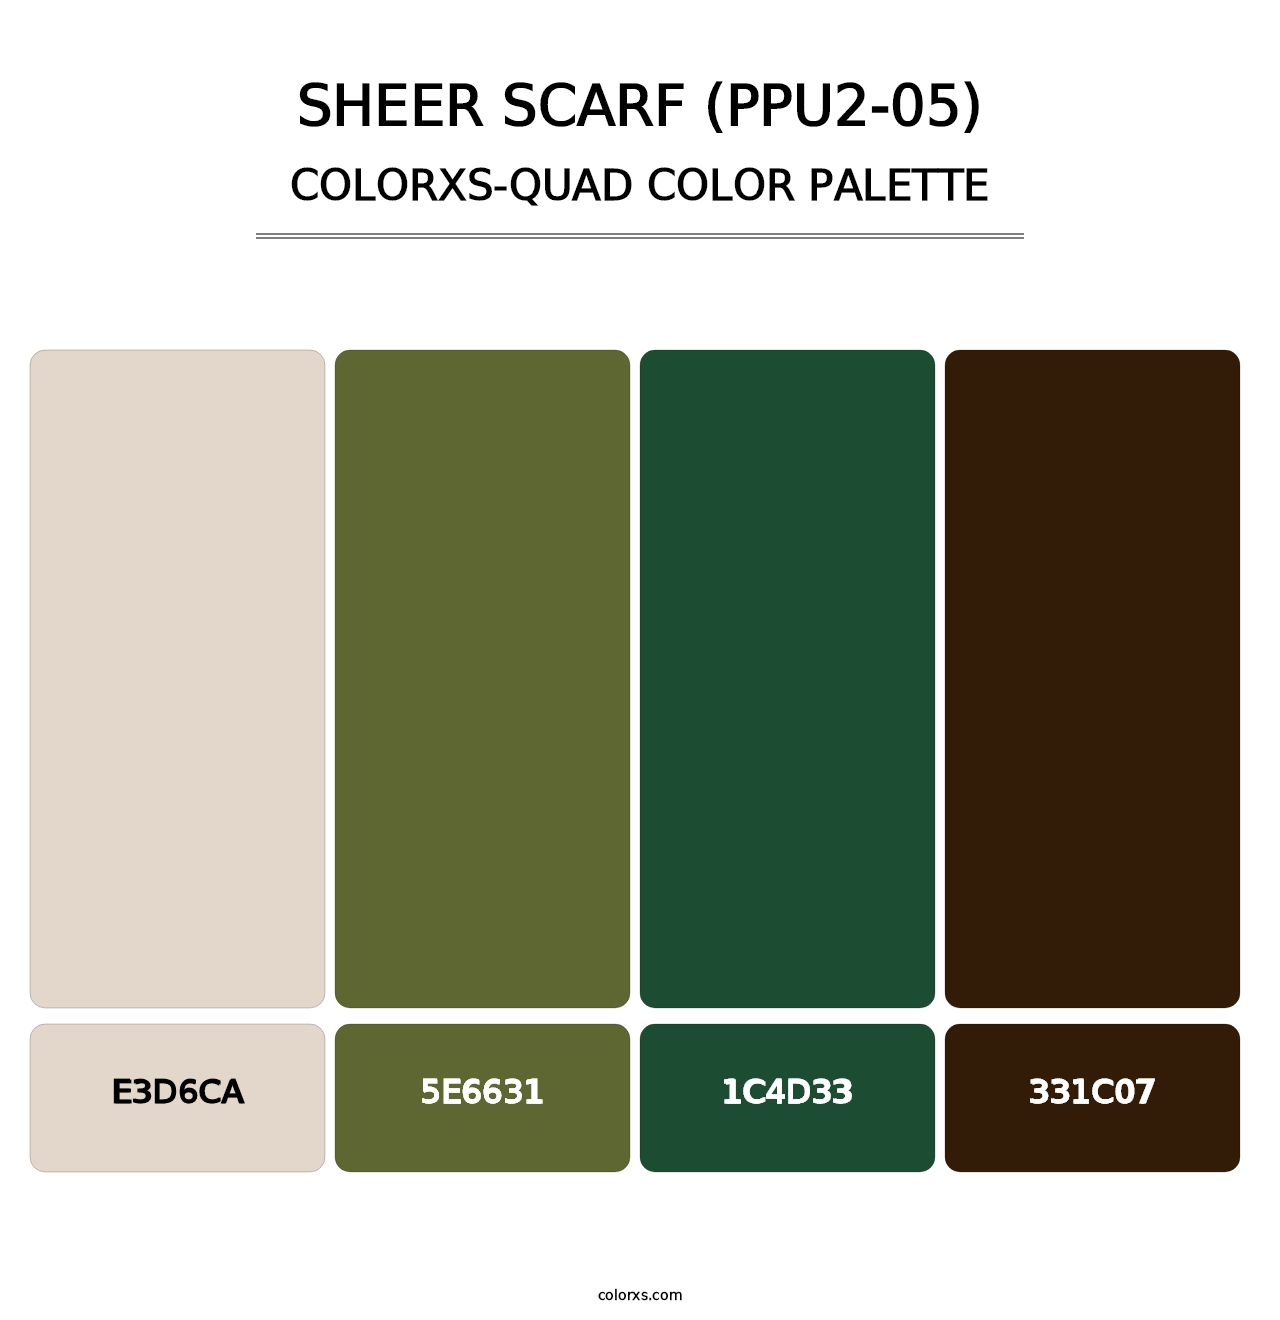 Sheer Scarf (PPU2-05) - Colorxs Quad Palette